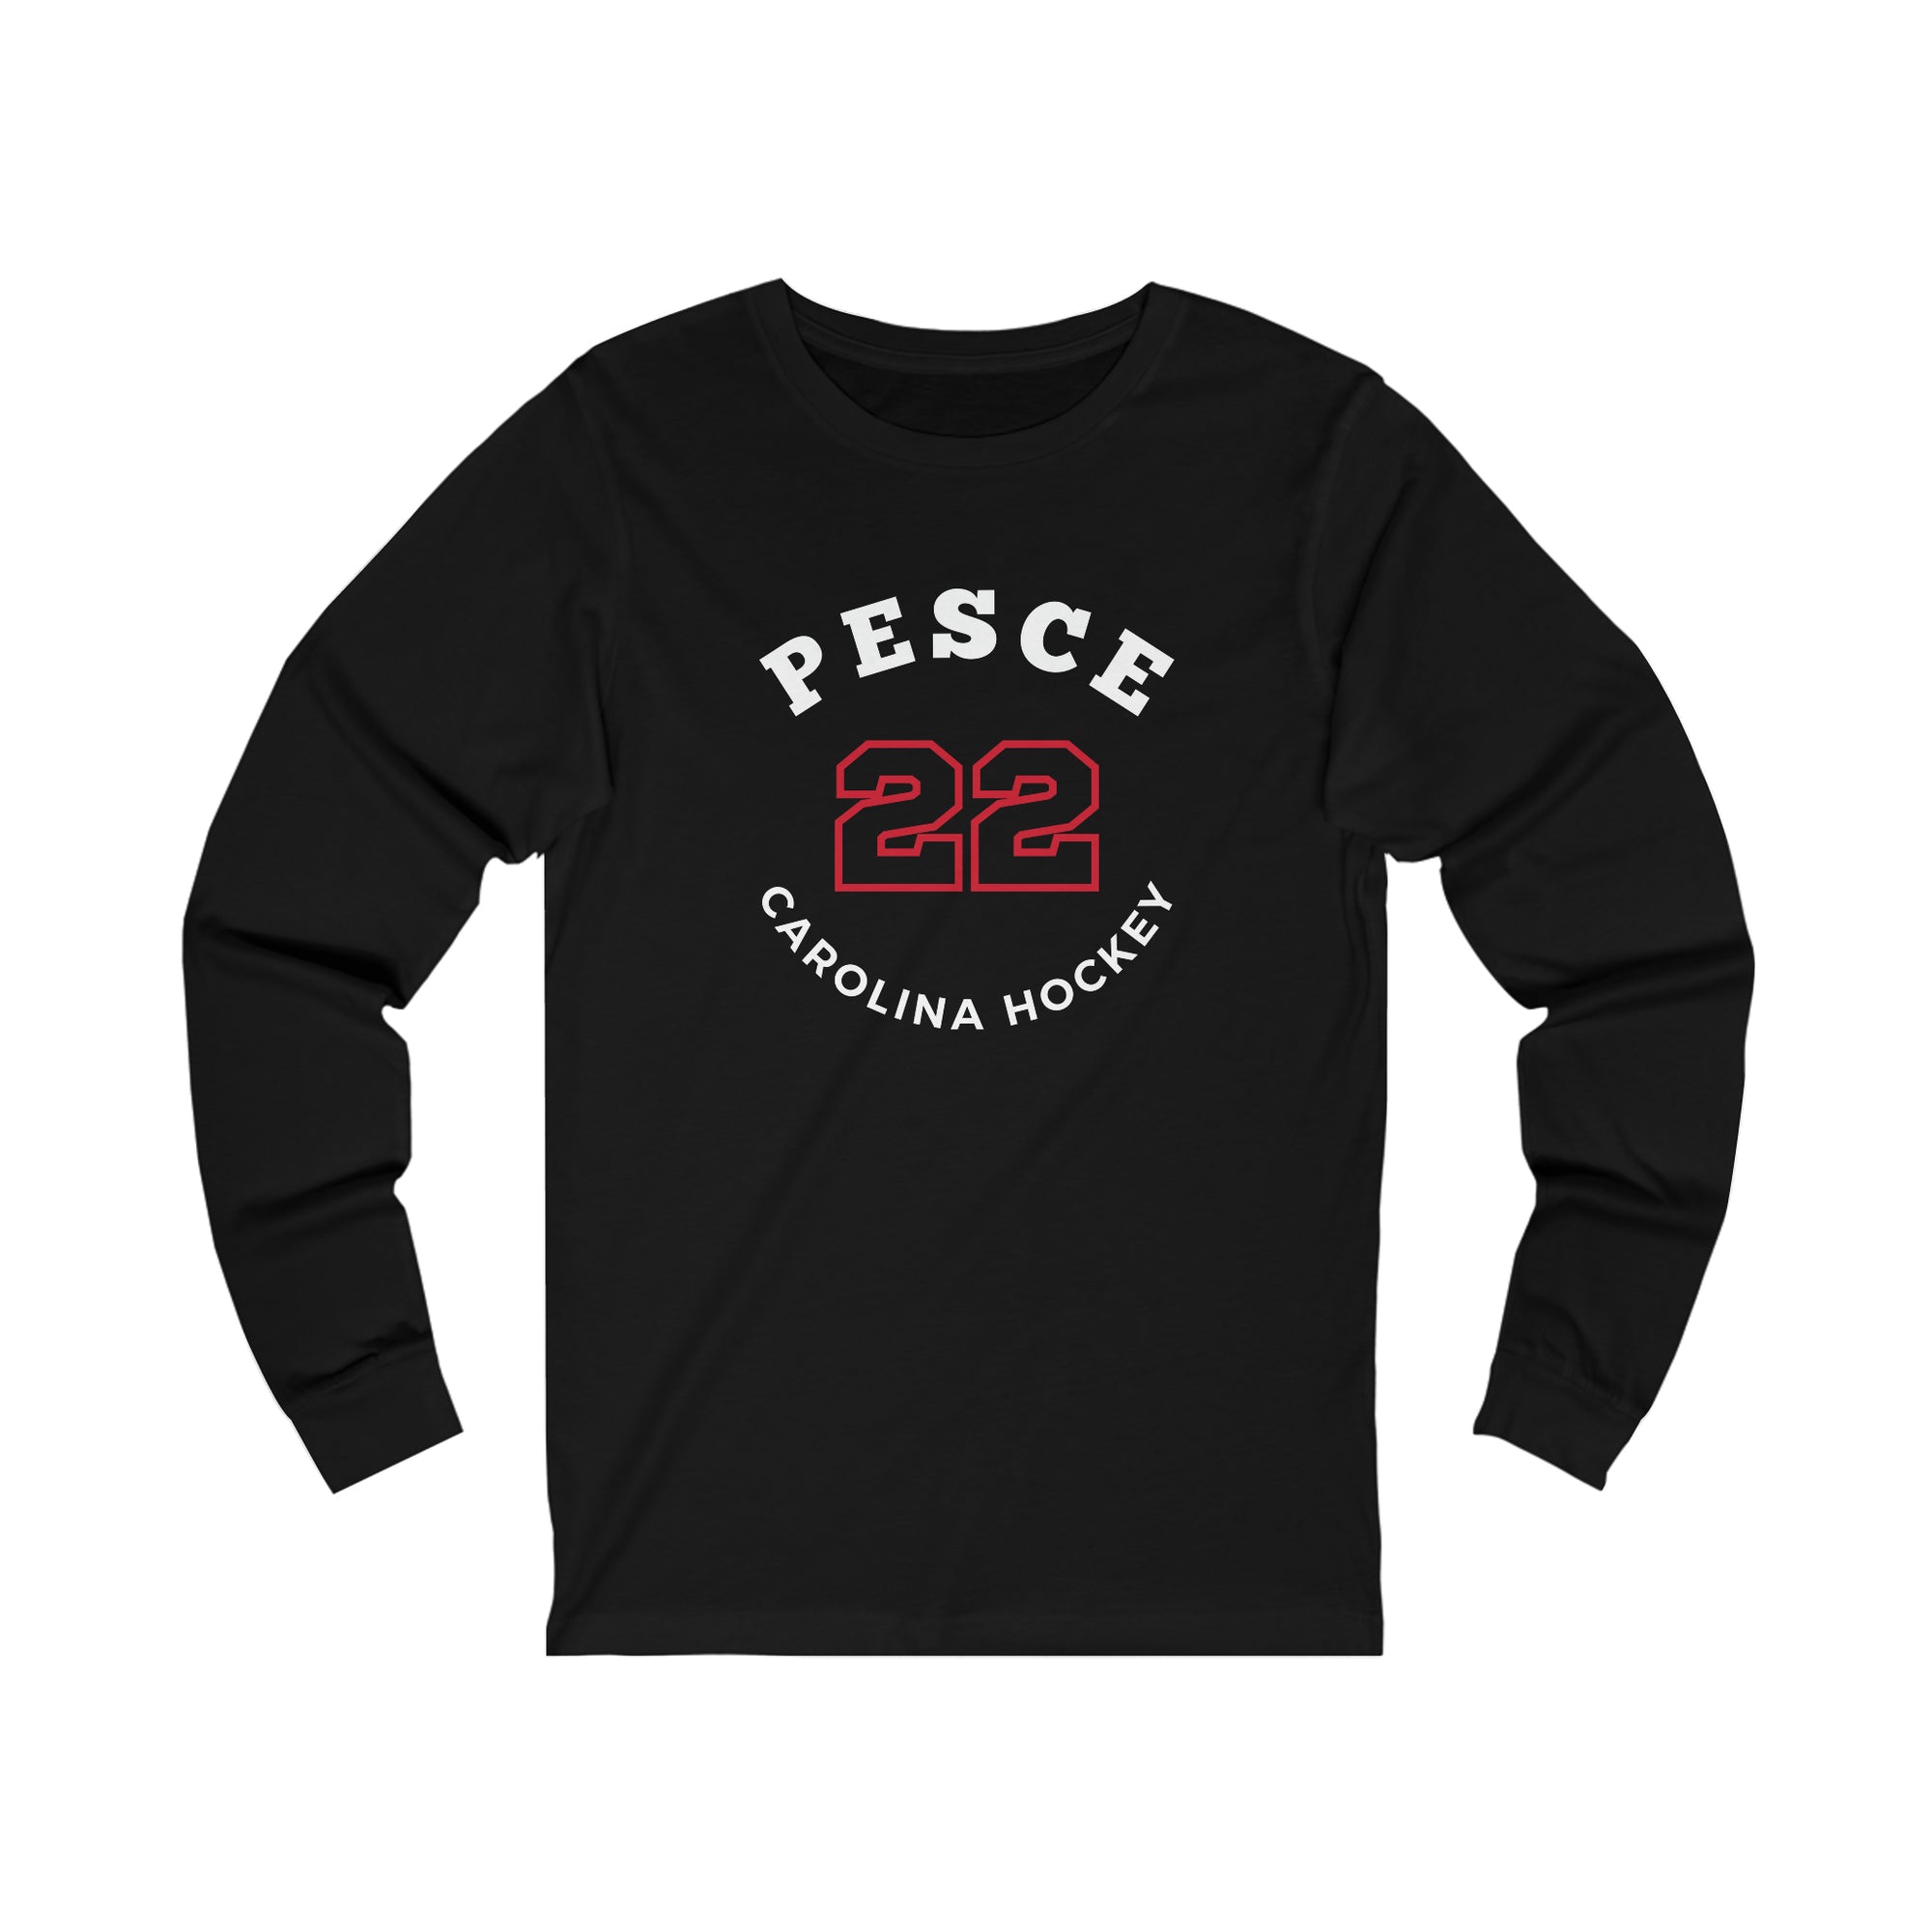 Pesce 22 Carolina Hockey Number Arch Design Unisex Jersey Long Sleeve Shirt